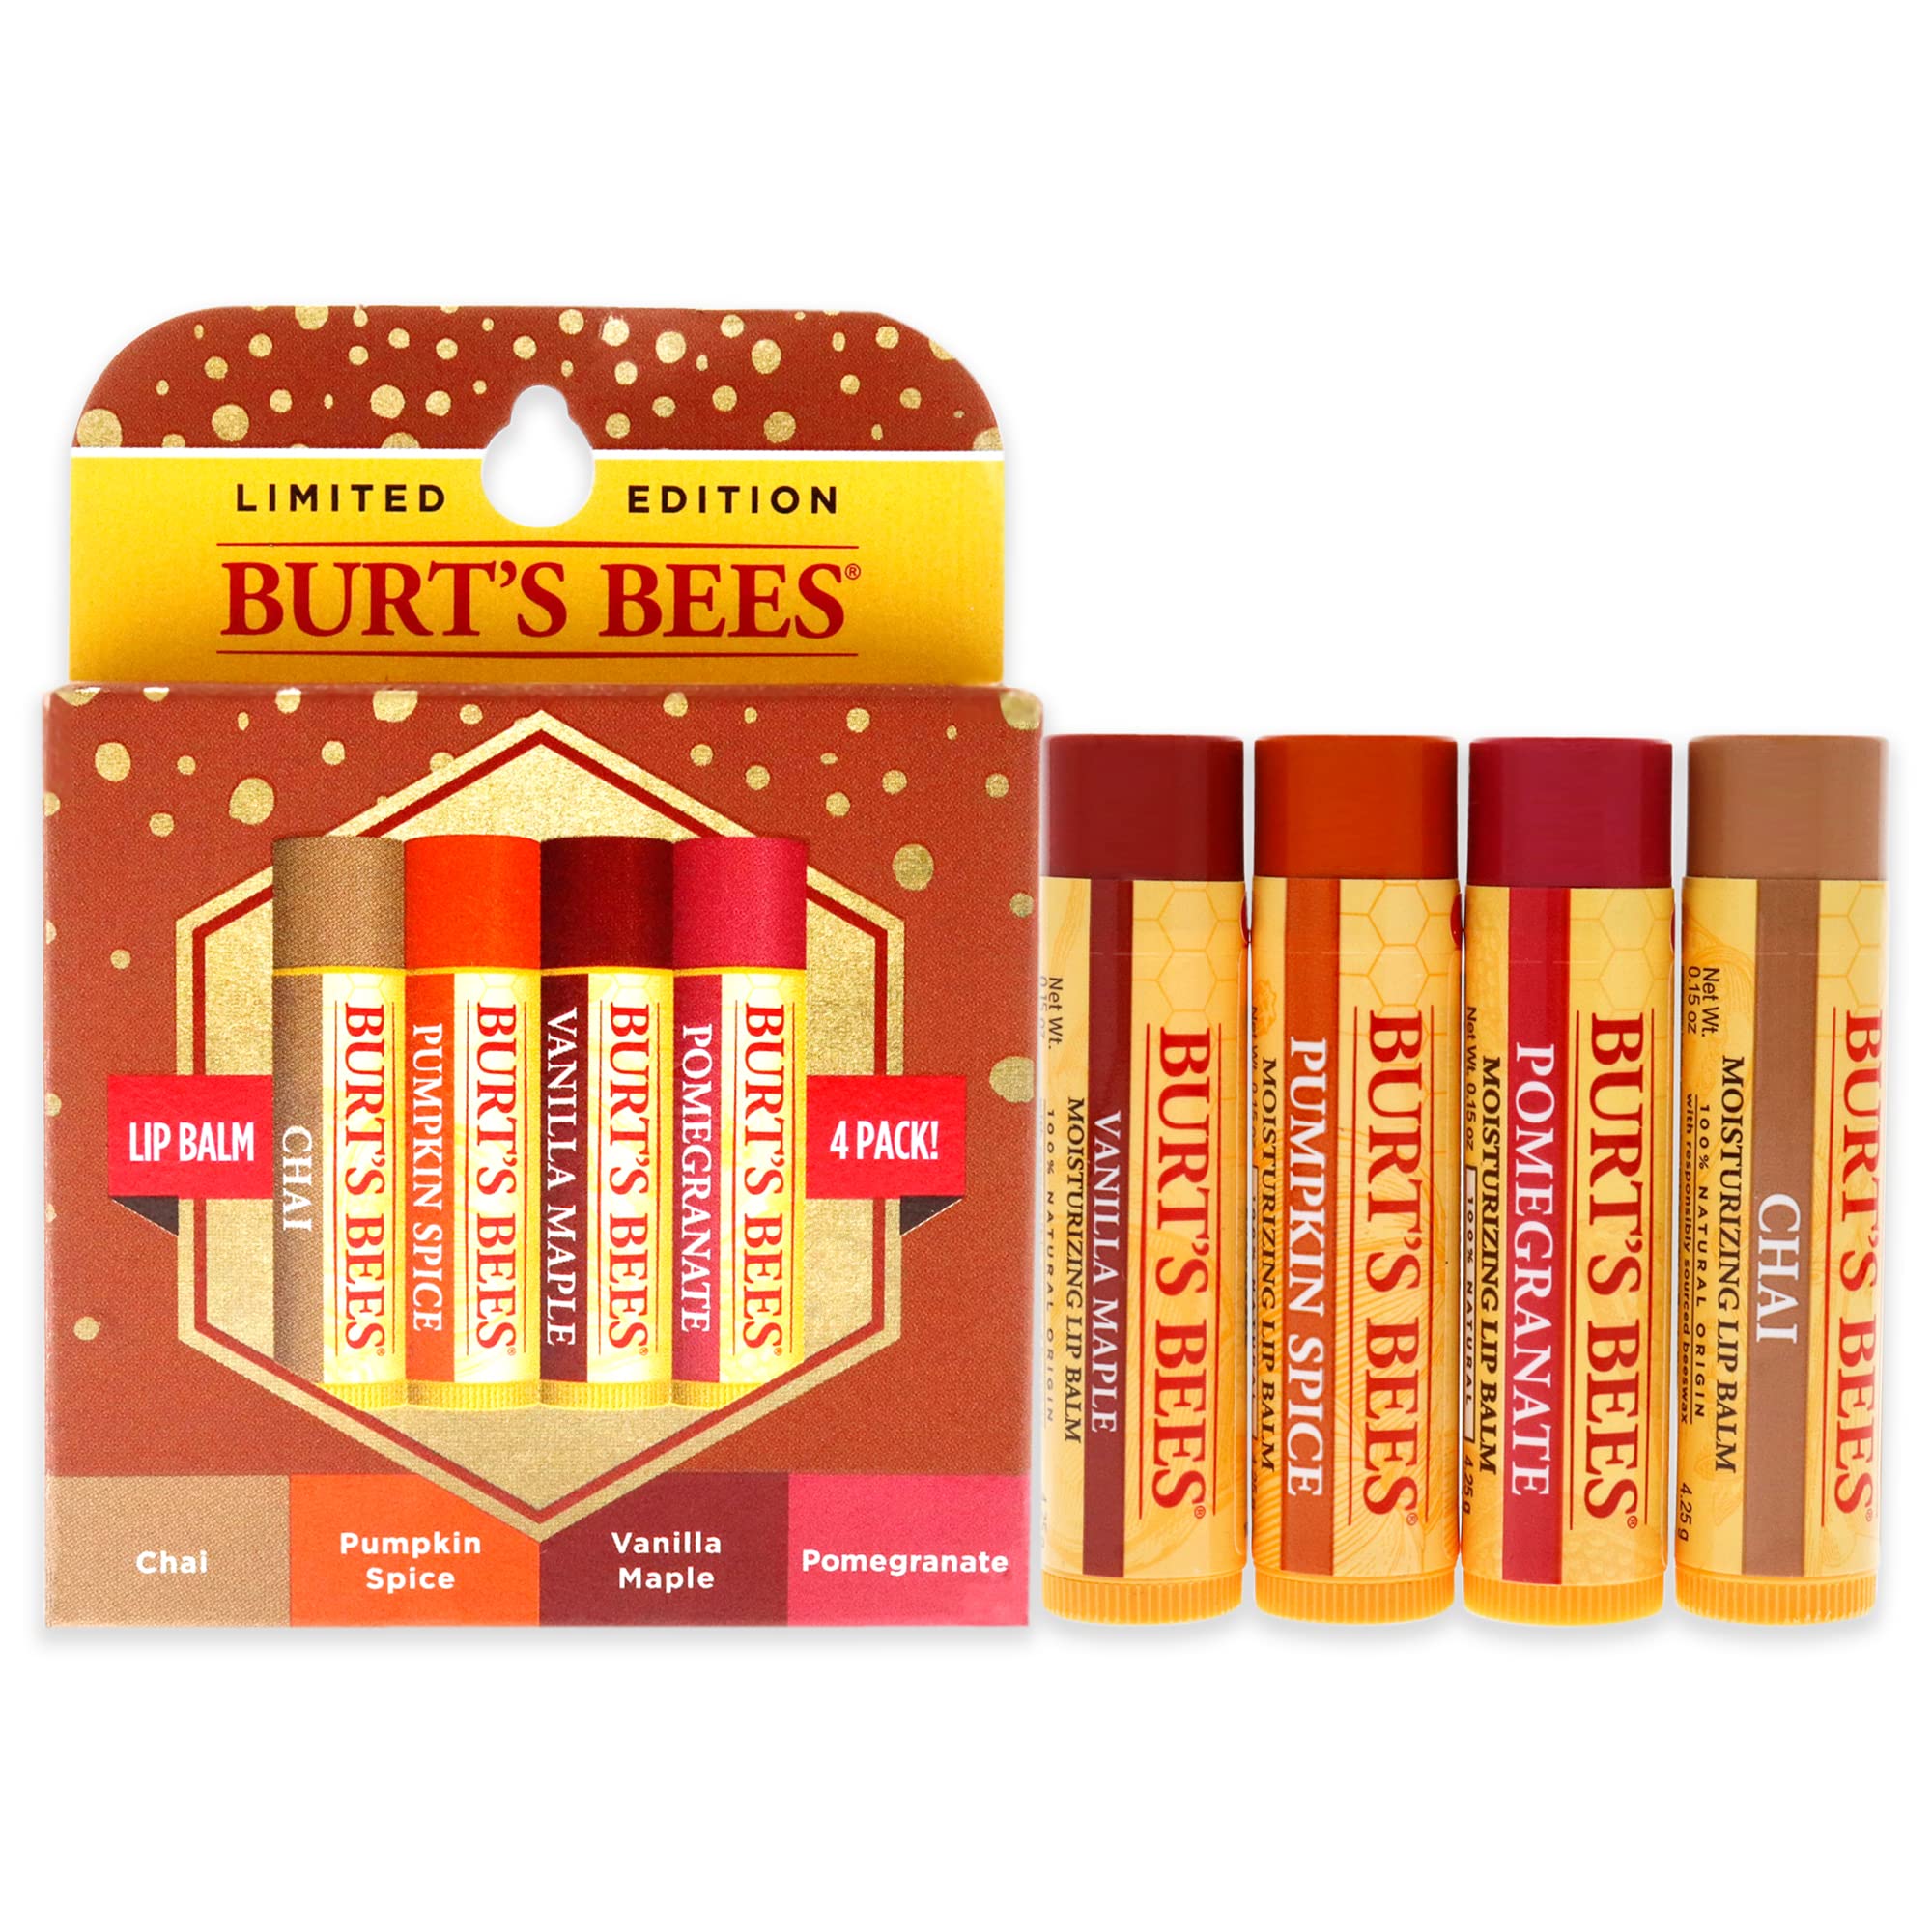 Burt's Bees South Africa